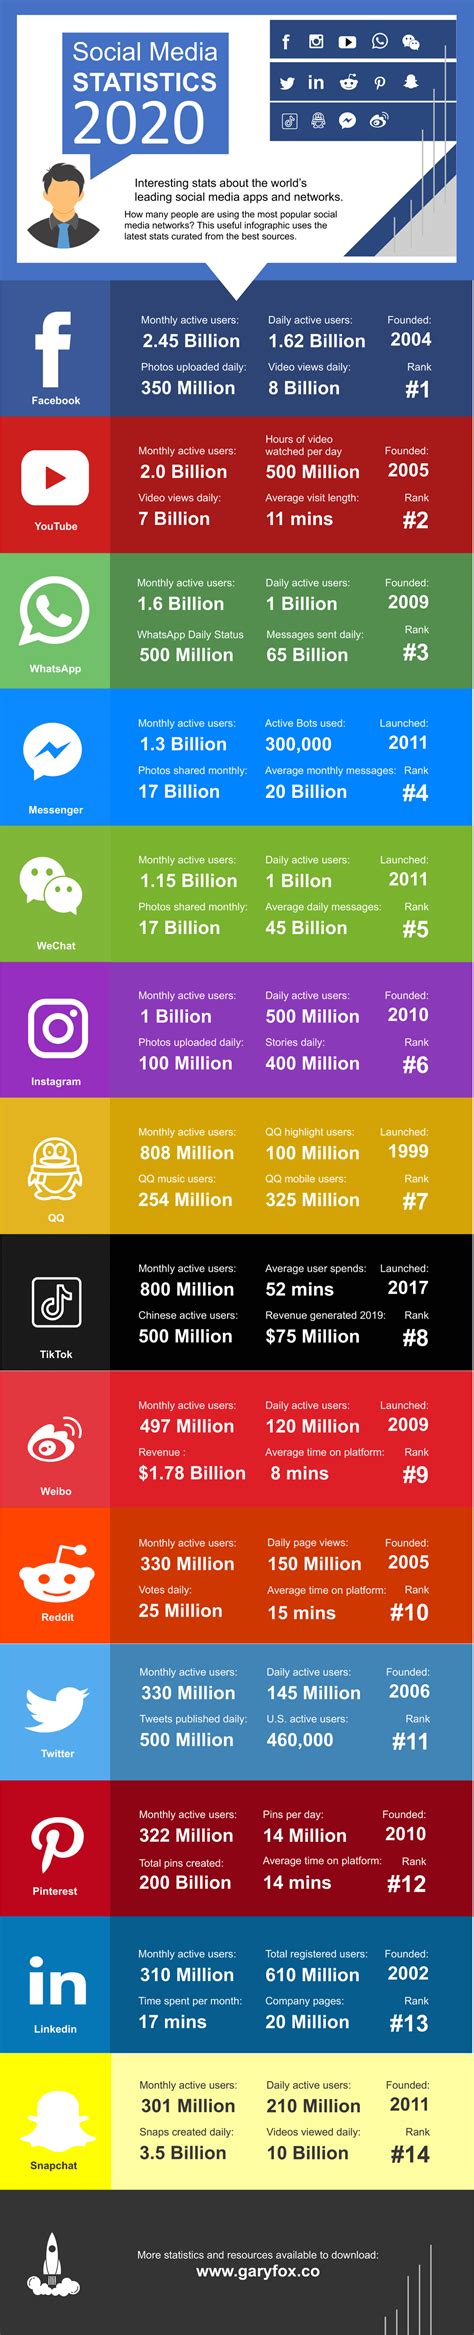 Social Media Statistics 2020 Data And Infographic Smm Socialmedia